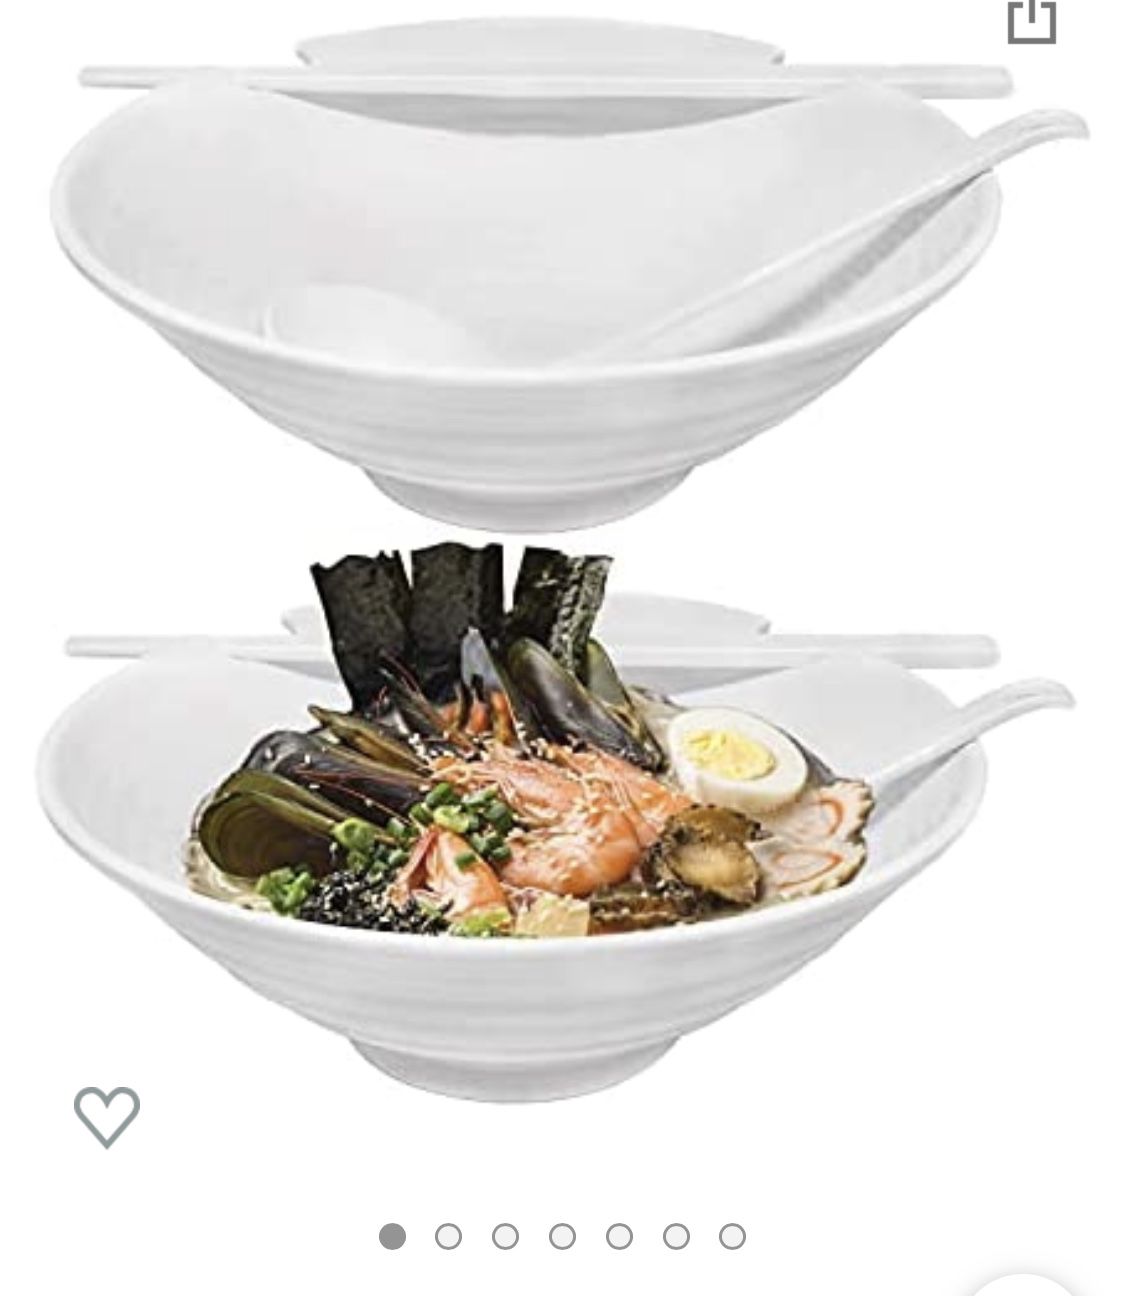 2 Sets of Ramen Bowl (White Melamine), 6pcs, 37oz Soup Bowls with Chopsticks and Spoons Set